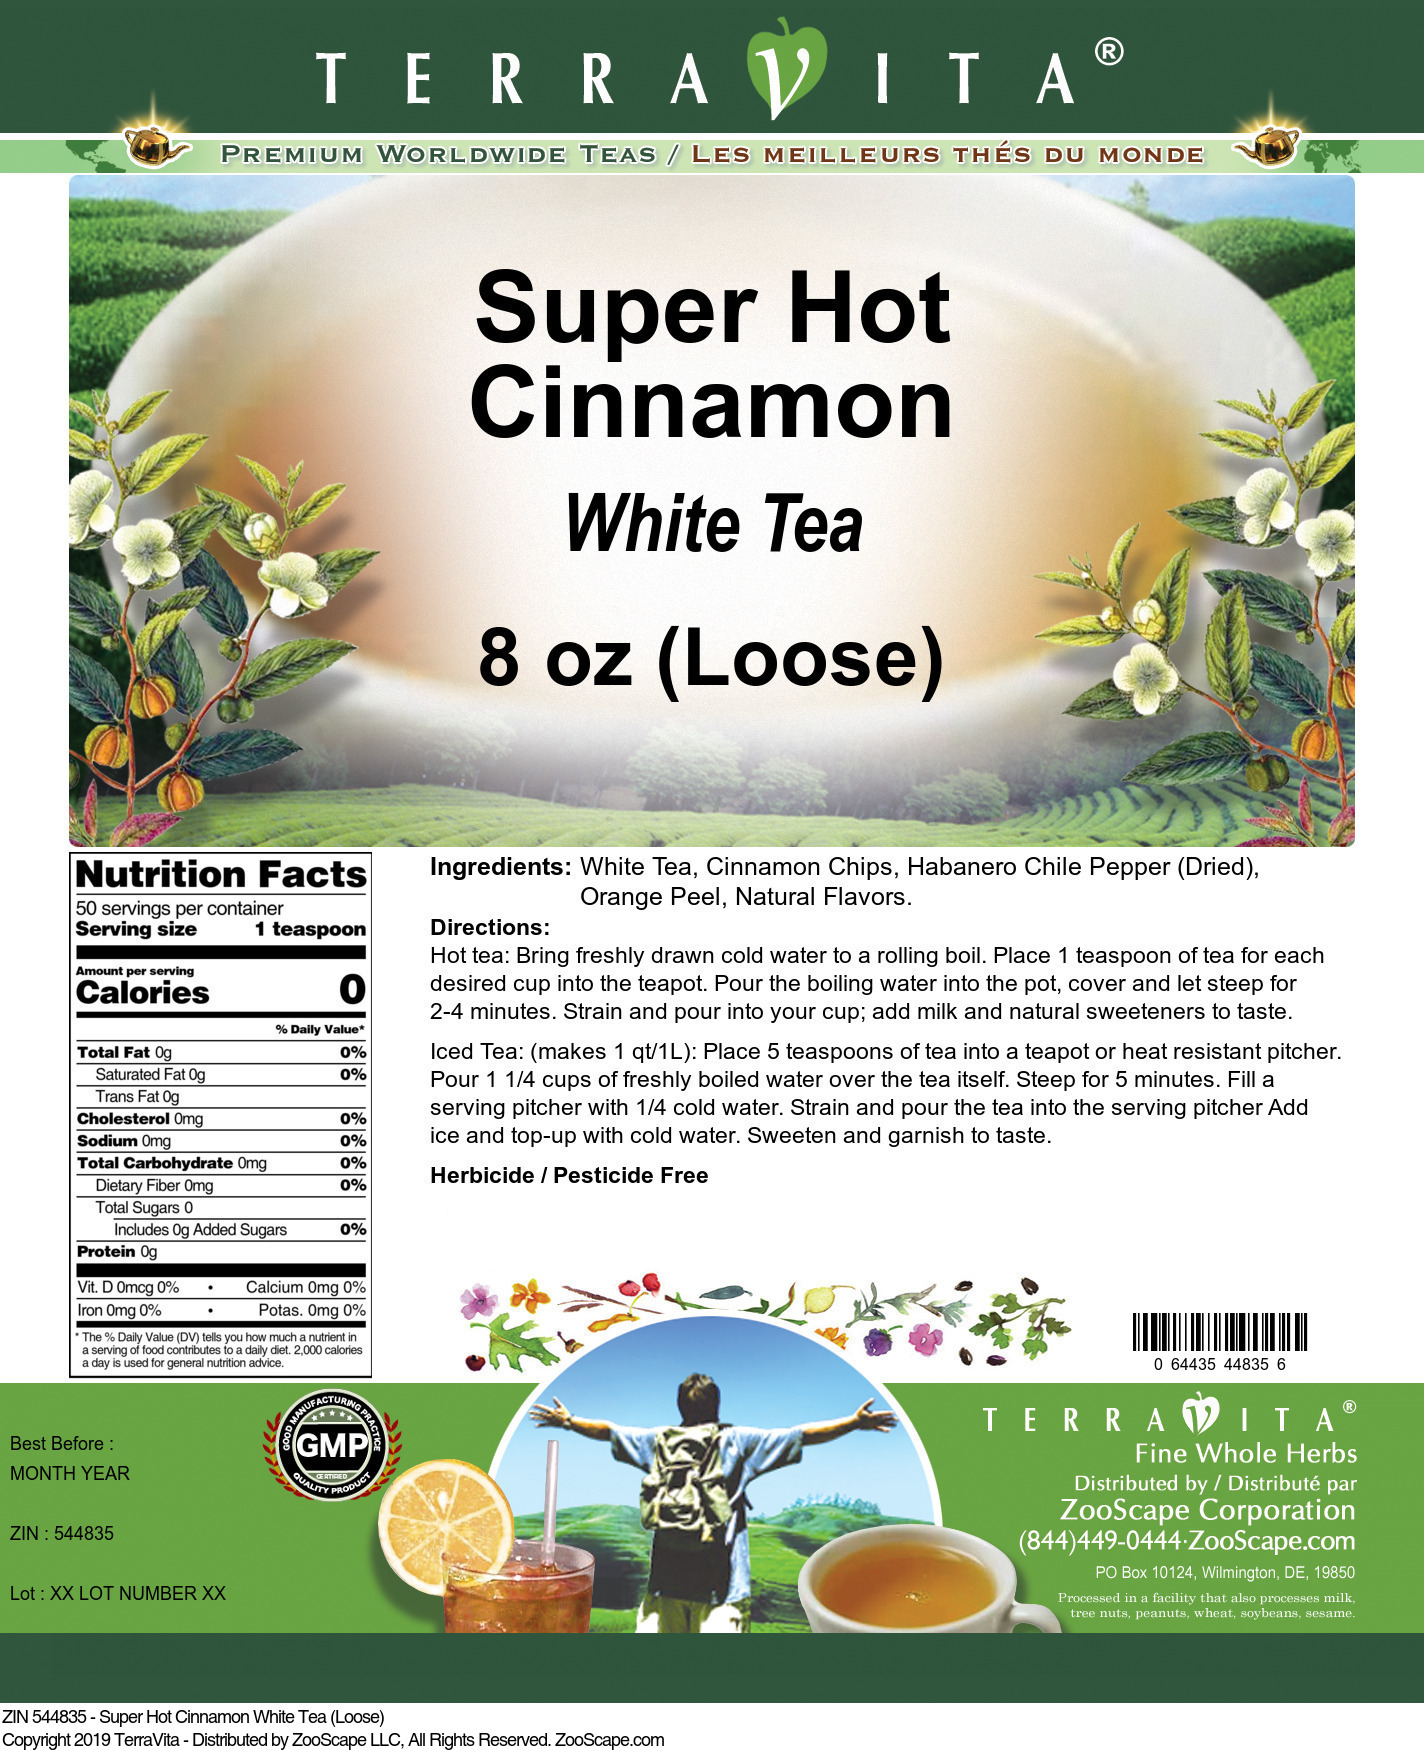 Super Hot Cinnamon White Tea (Loose) - Label